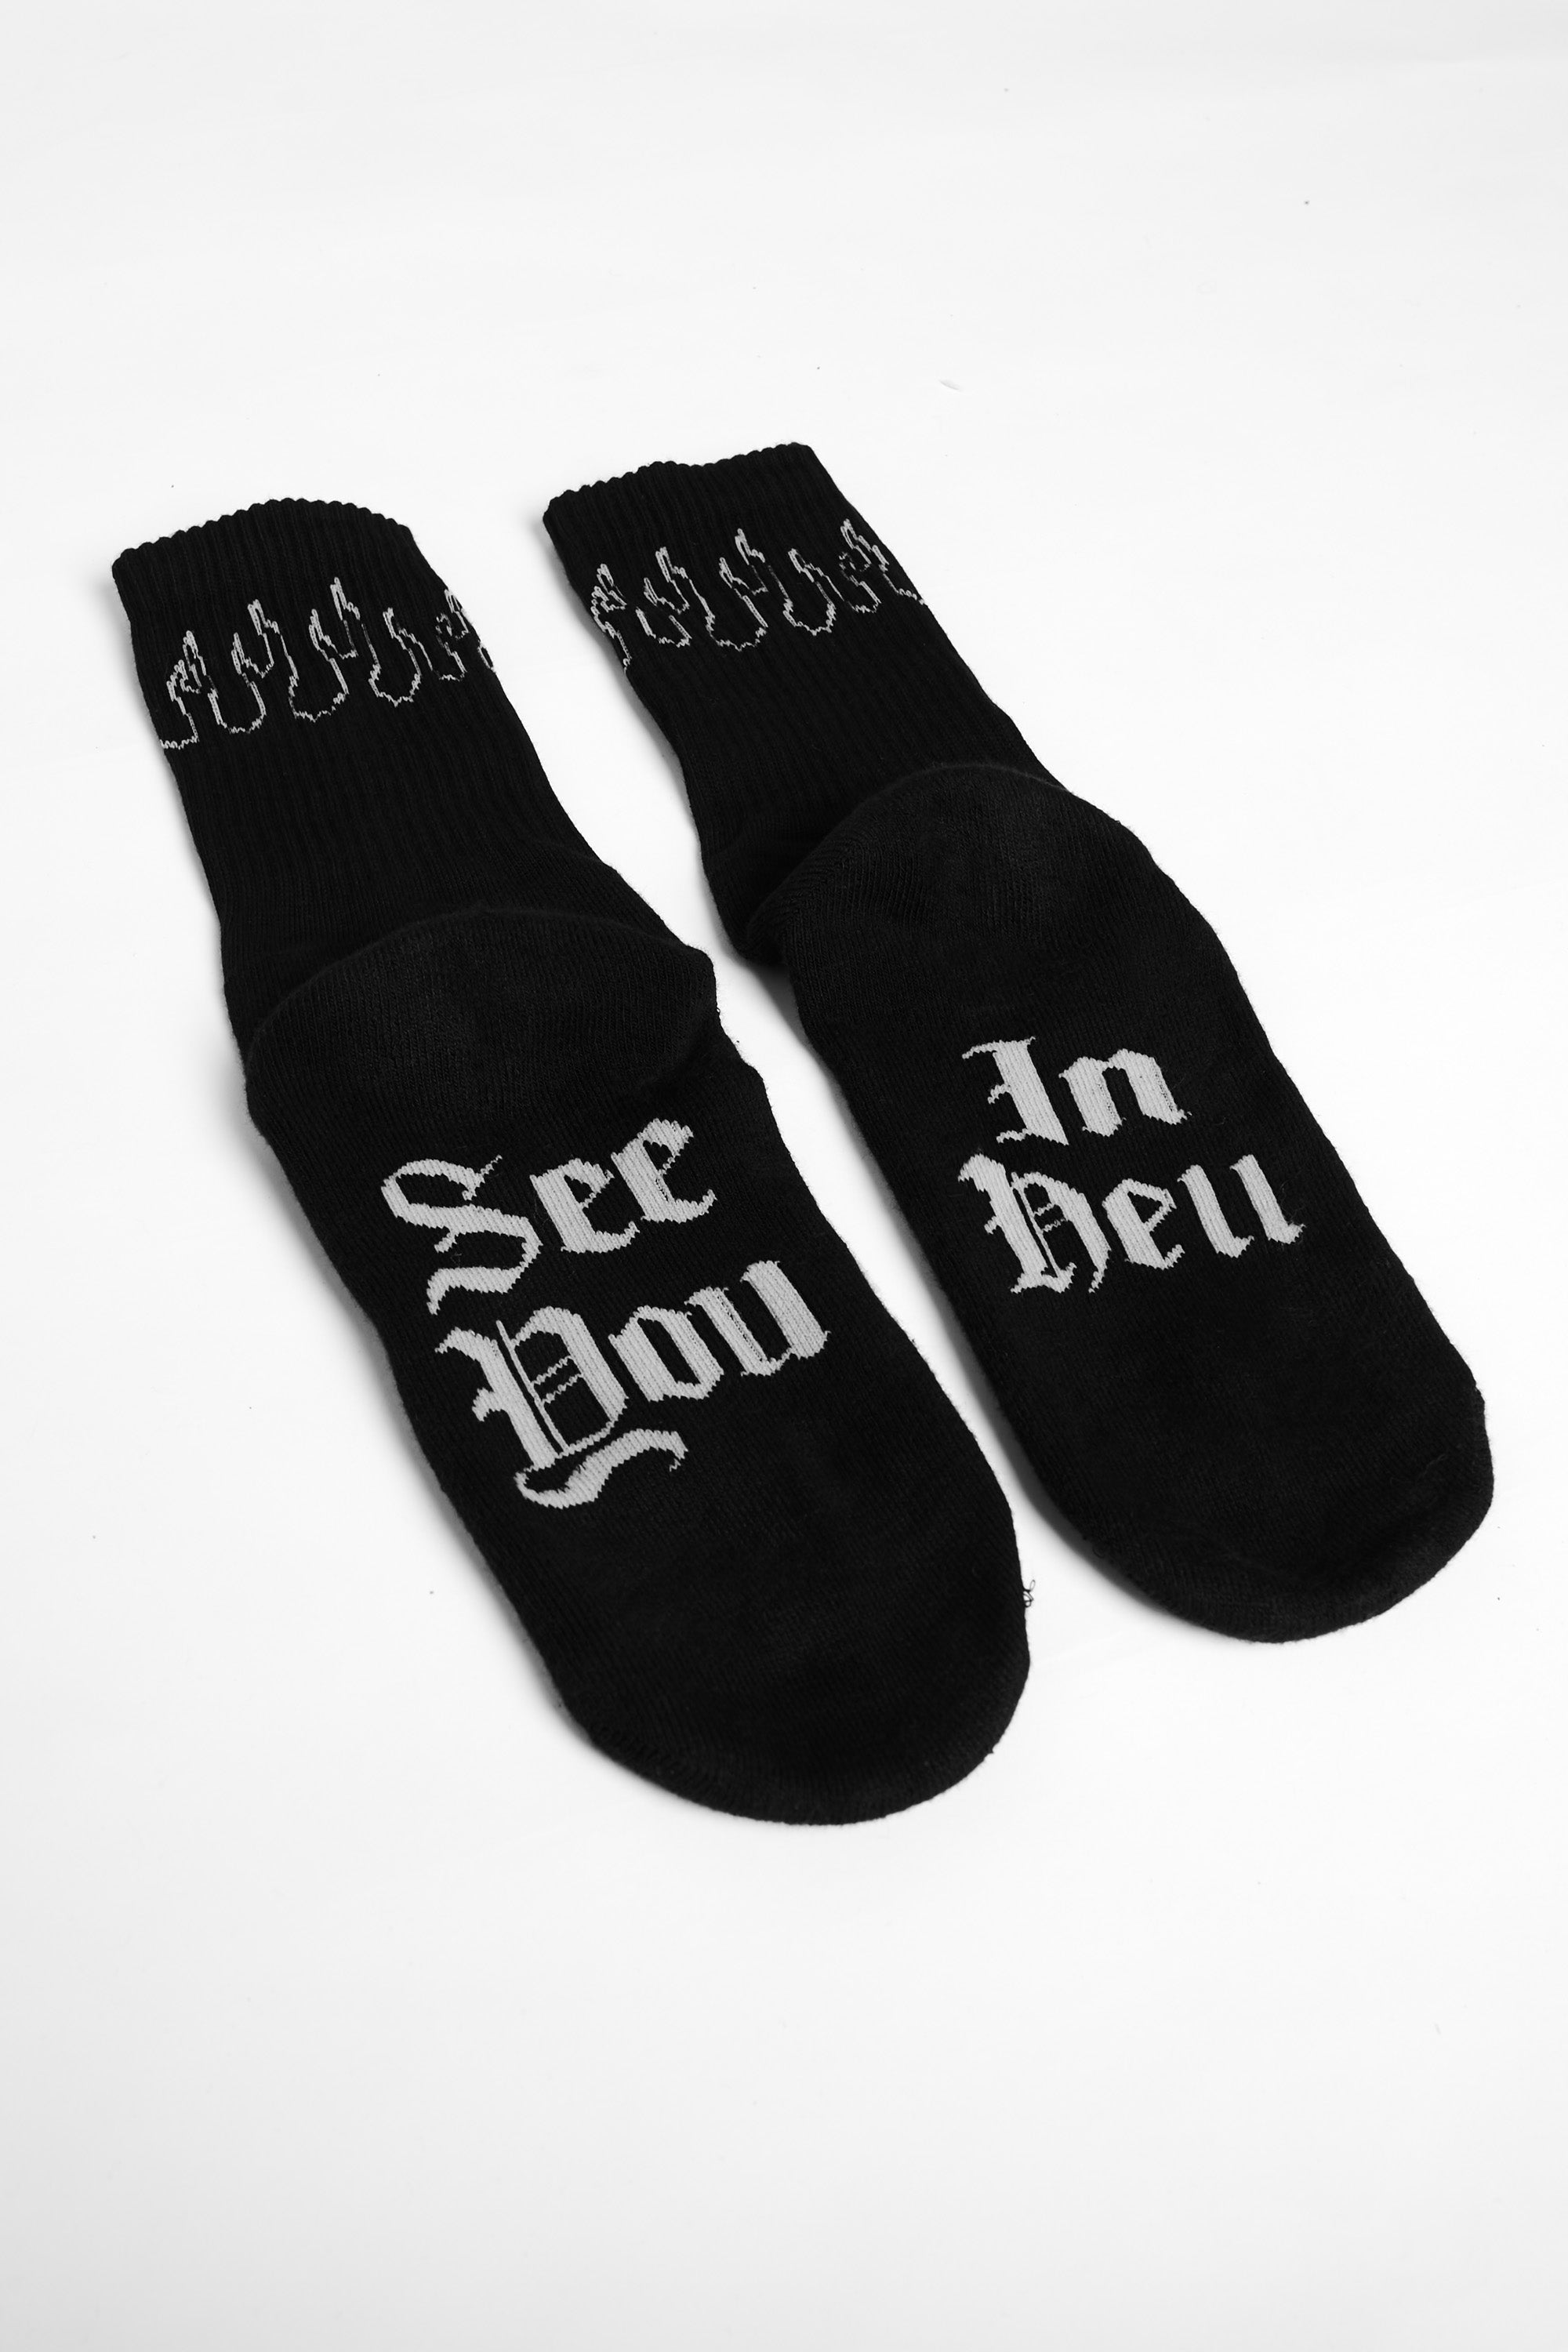 See You In Hell Socks - Mary Wyatt London